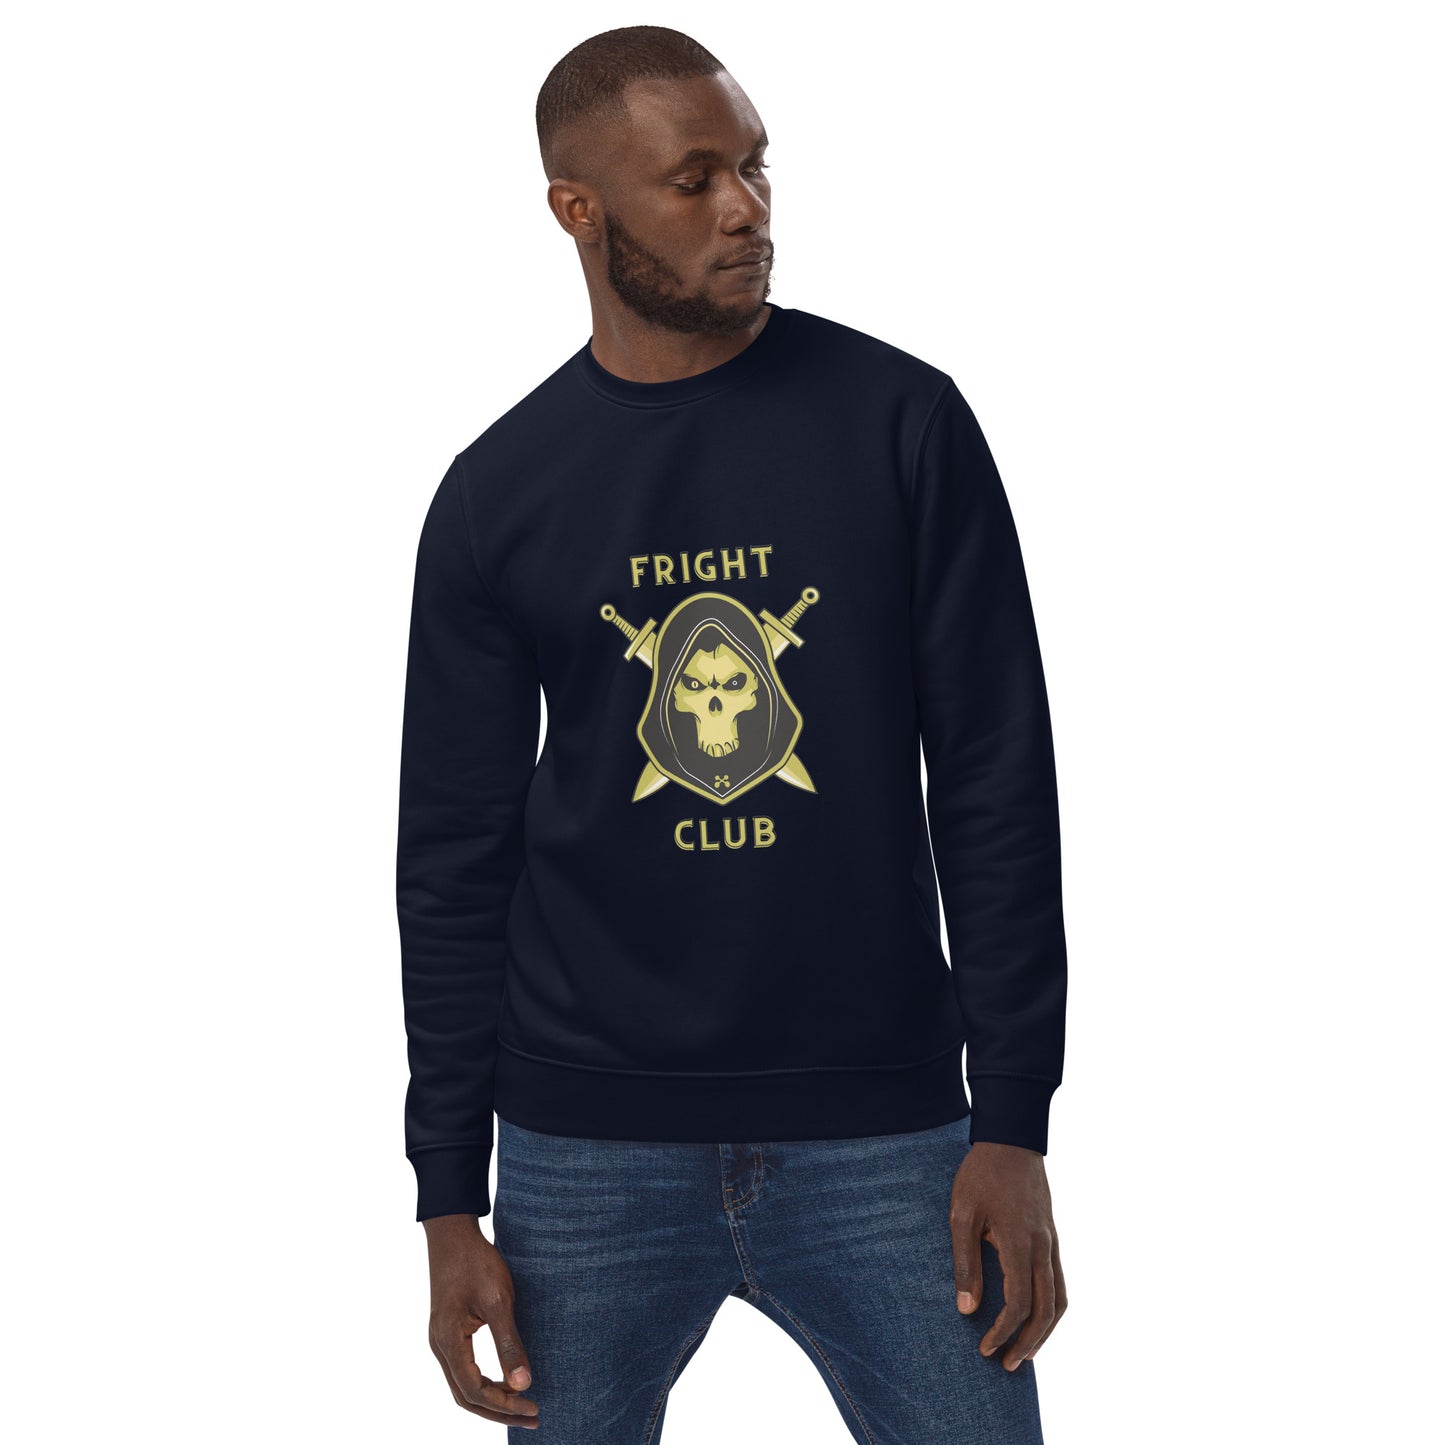 Fright Club Unisex eco sweatshirt - A. Mandaline Art